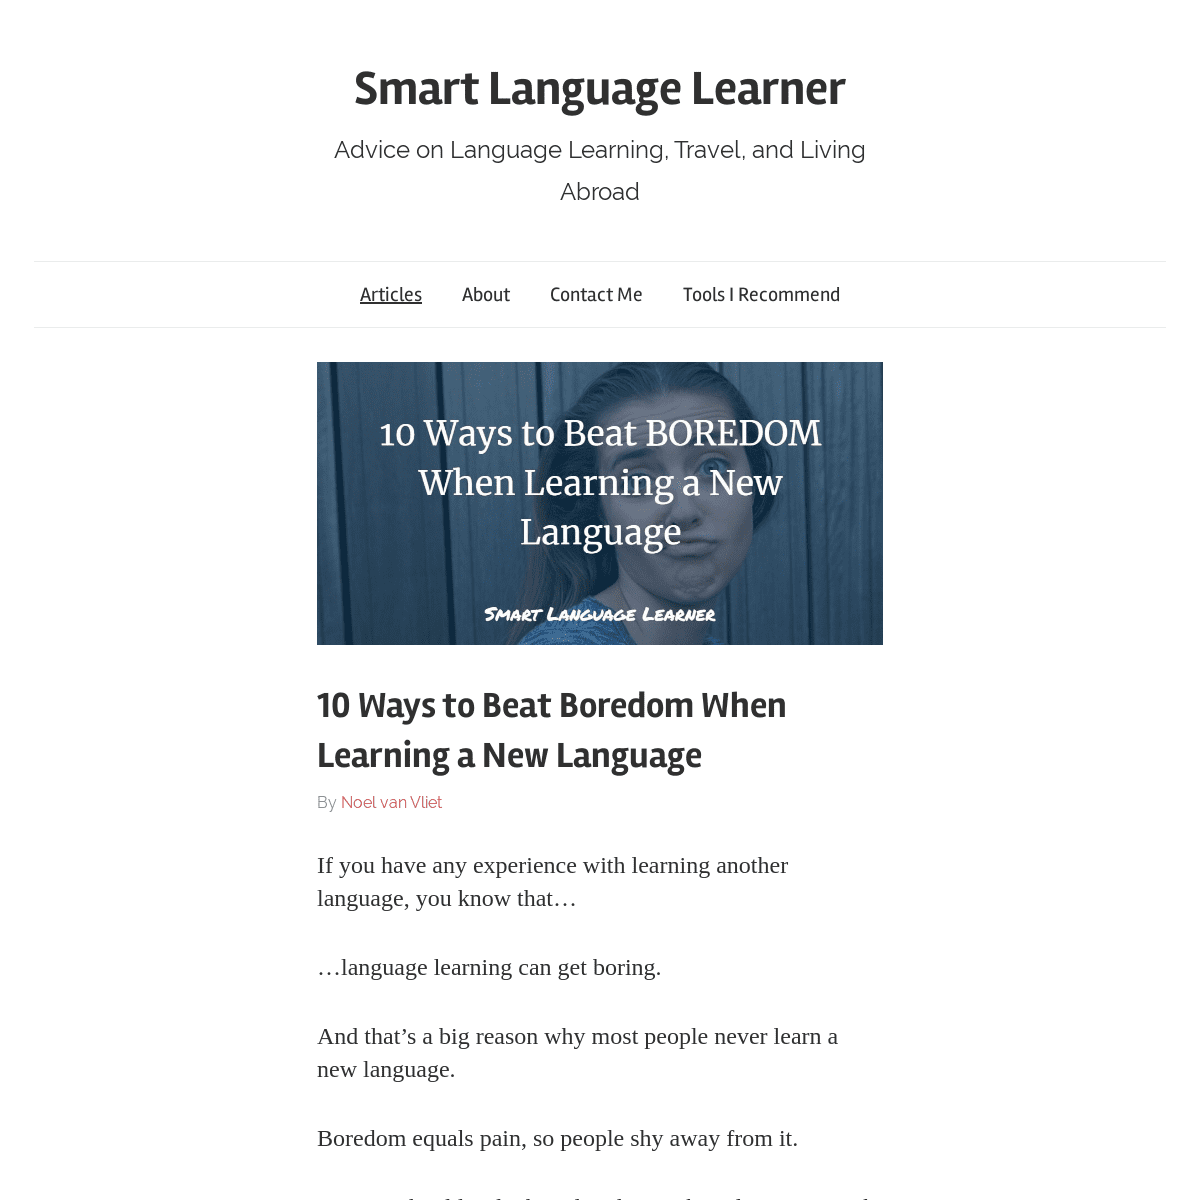 A complete backup of smartlanguagelearner.com